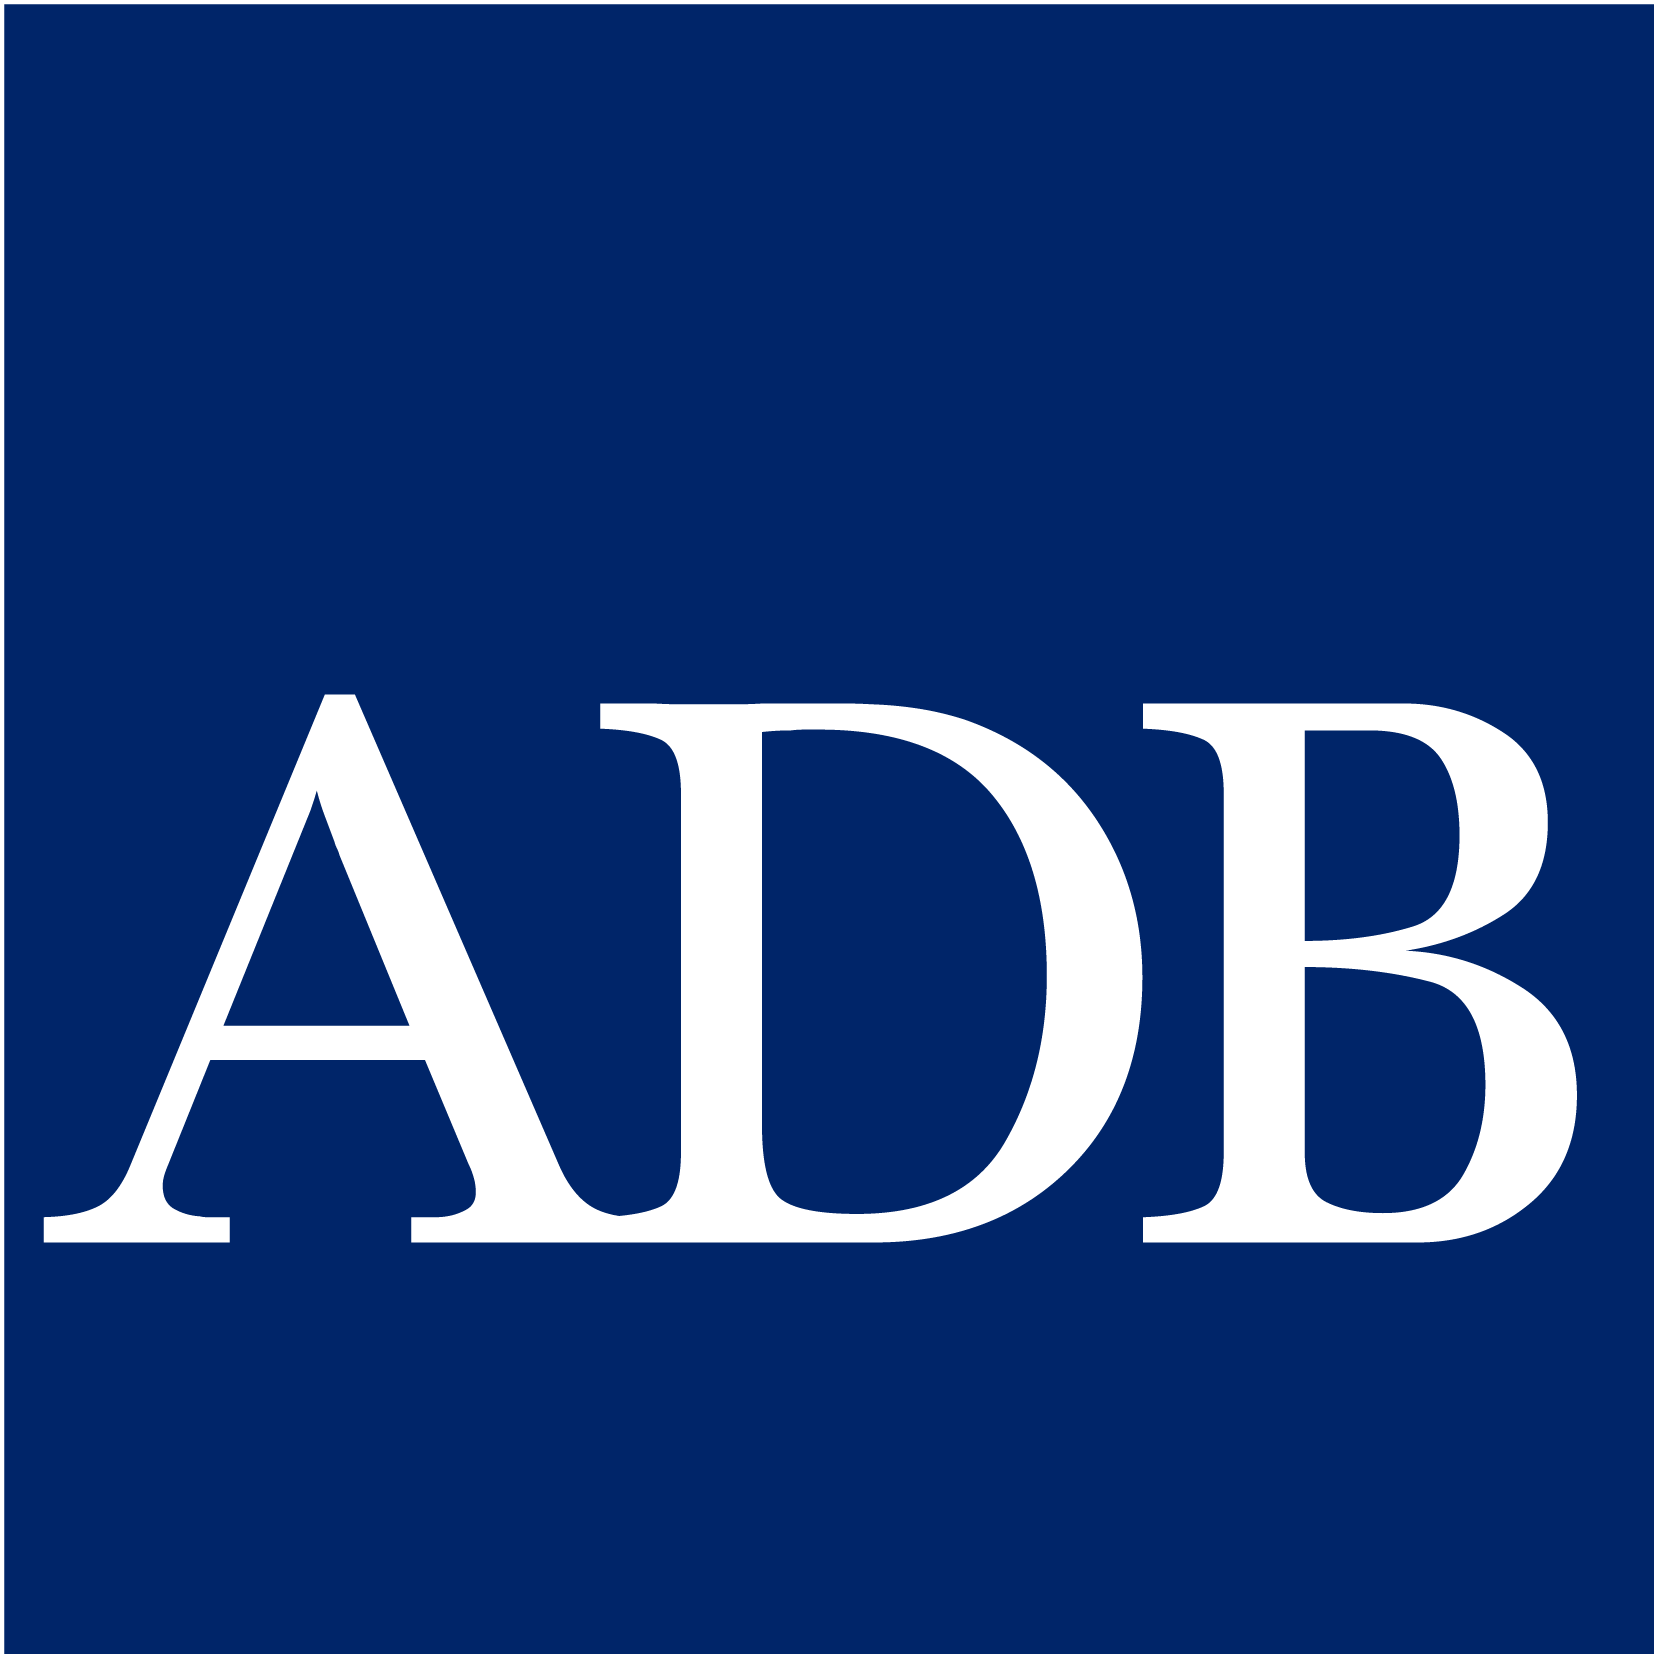 ADB Logo - Asian Development Bank